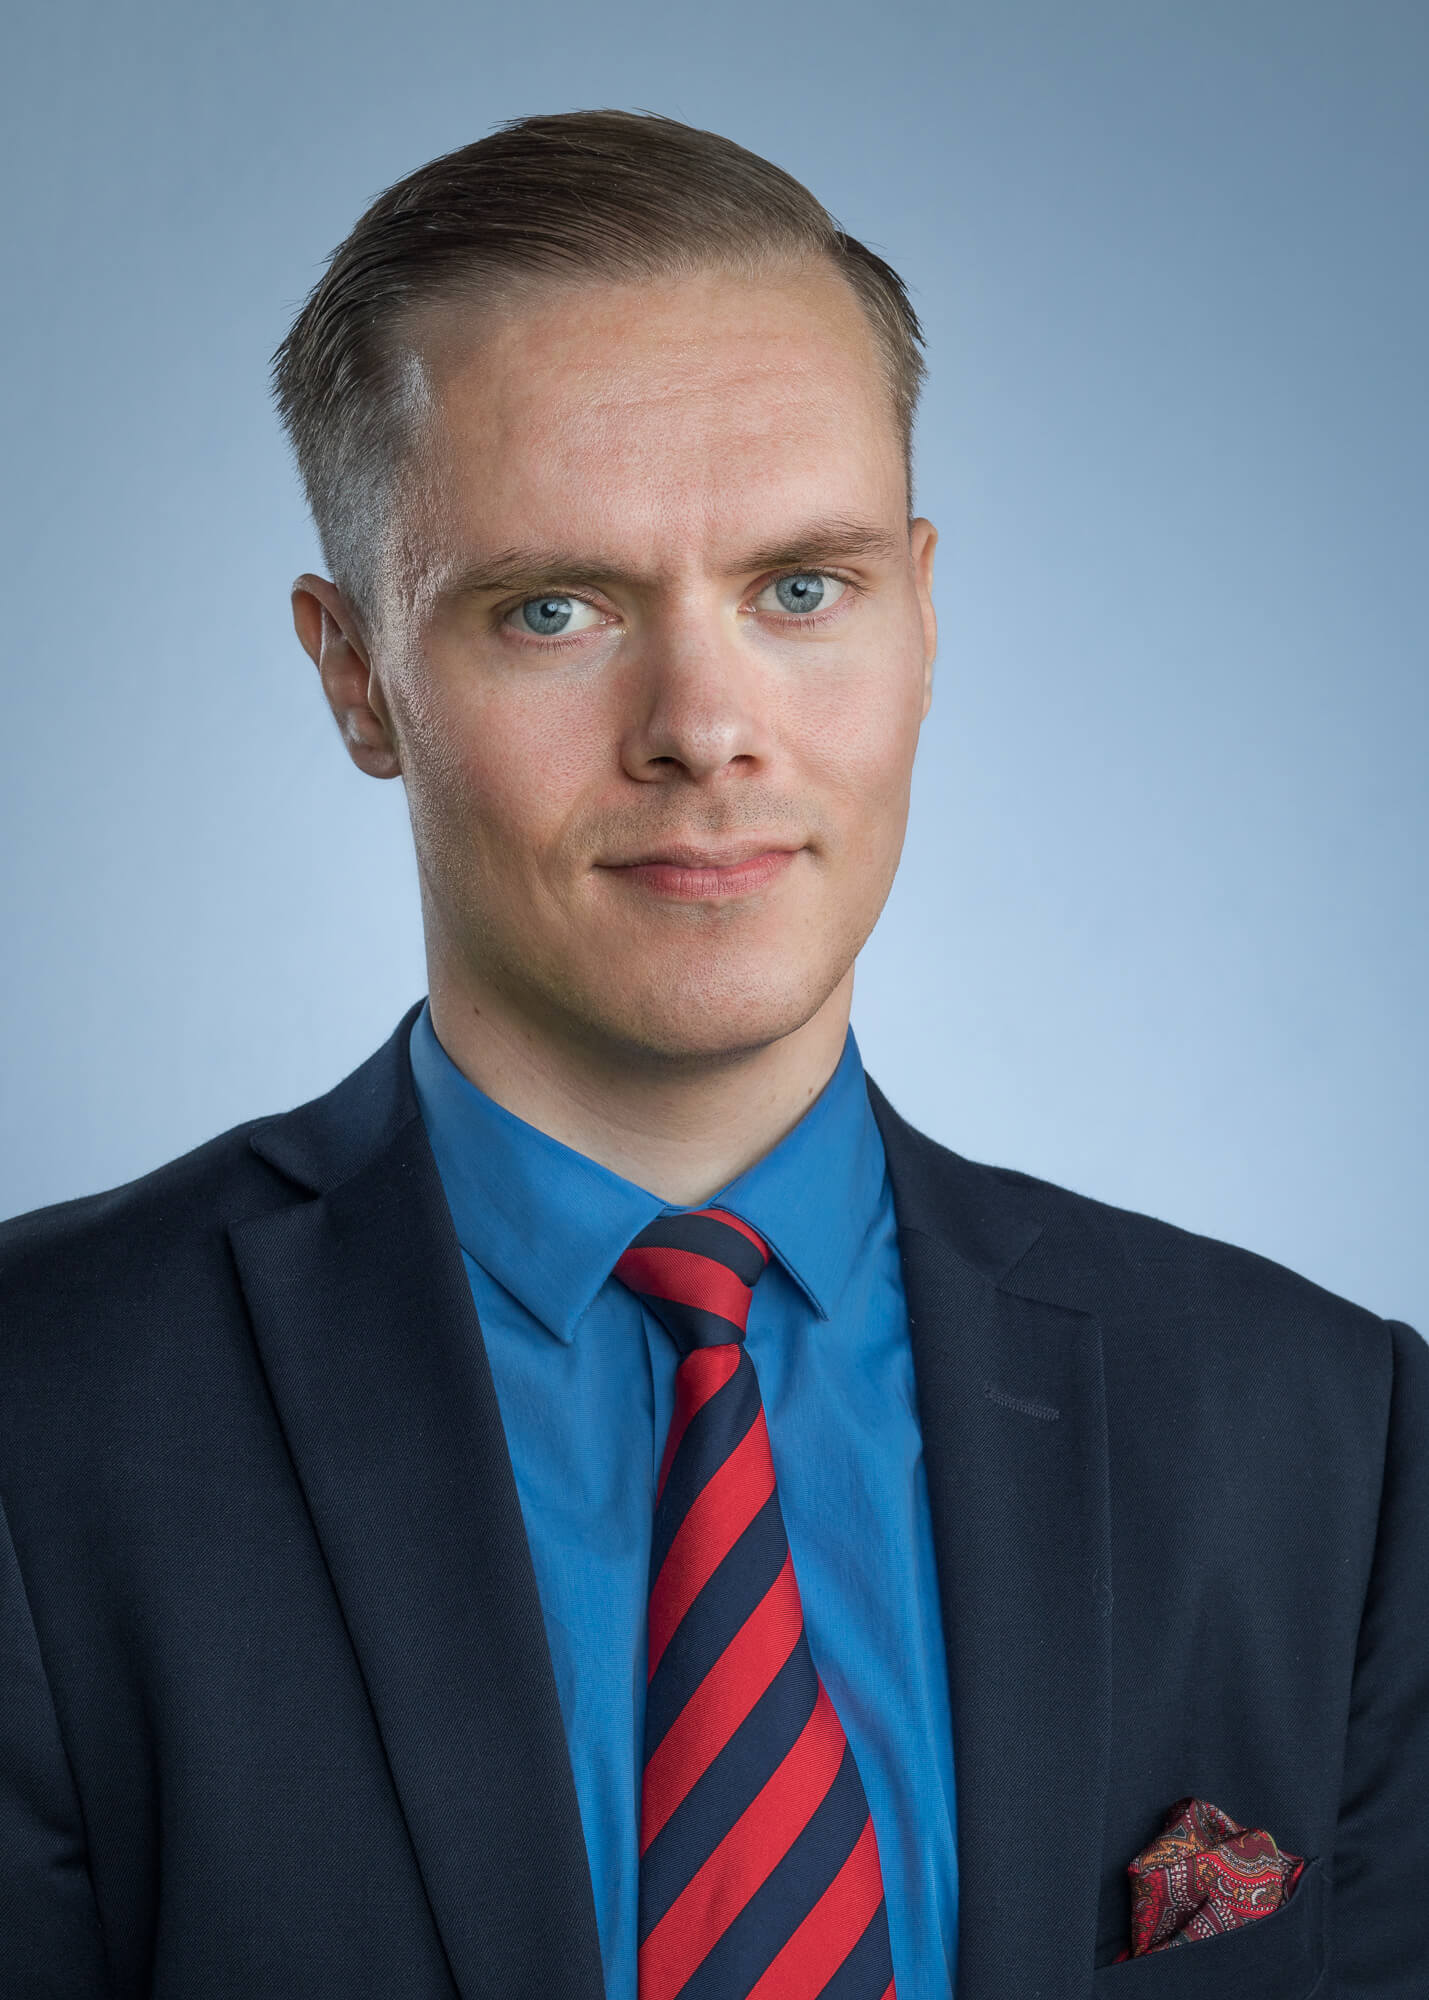 Matias Holmqvist